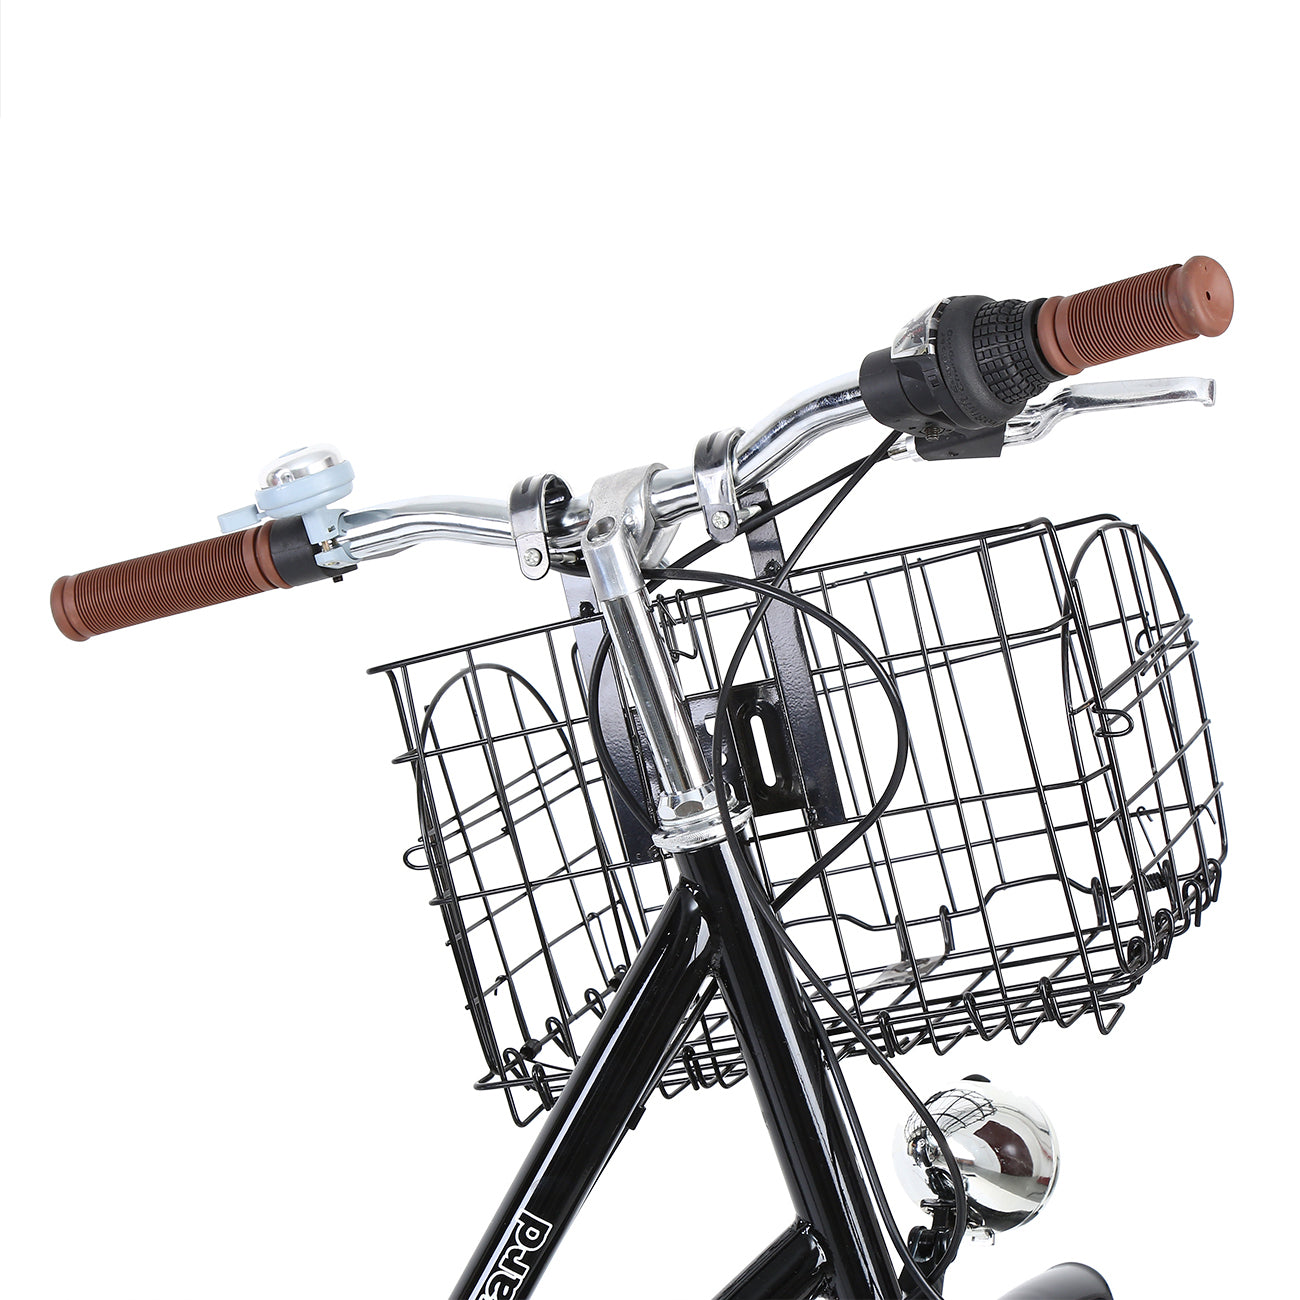 28 Inches 7 Speeds Vintage City Bike Ladies Bike Outdoor Sports City Urban Bicycle Shopper Bike Woman Bikes with Baskets (Black)